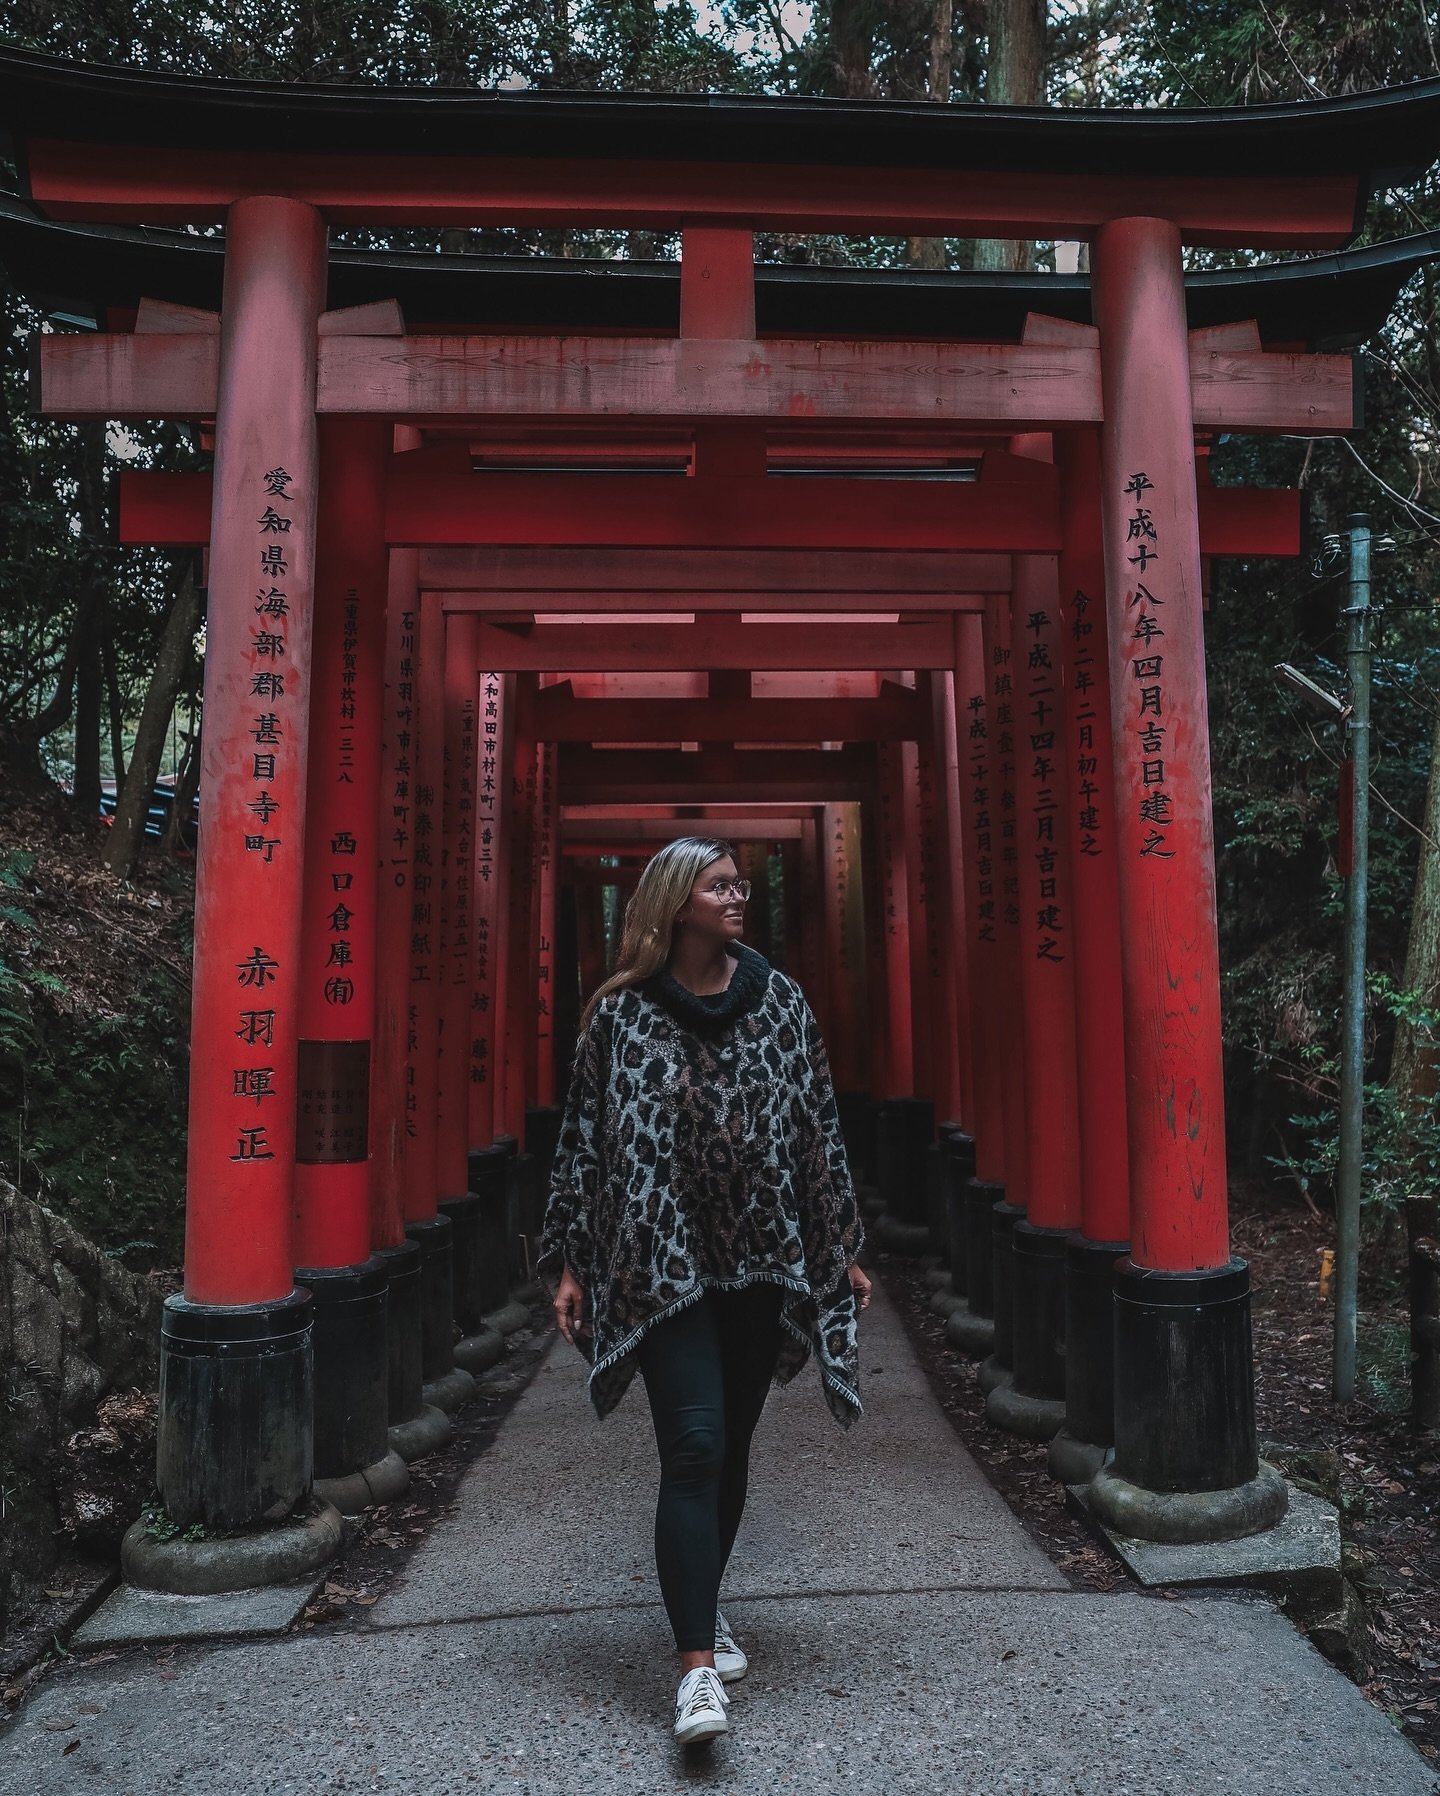 I had to start this short stay in Kyoto by an early morning visit to Fushimi-Inari Shrine!

Its thousands of vermilion torii gates lead to the sacred Mount Inari forest 🌳 

#fushimiinari #kyotojapan #fushimiinaritaisha #japaneseshrine